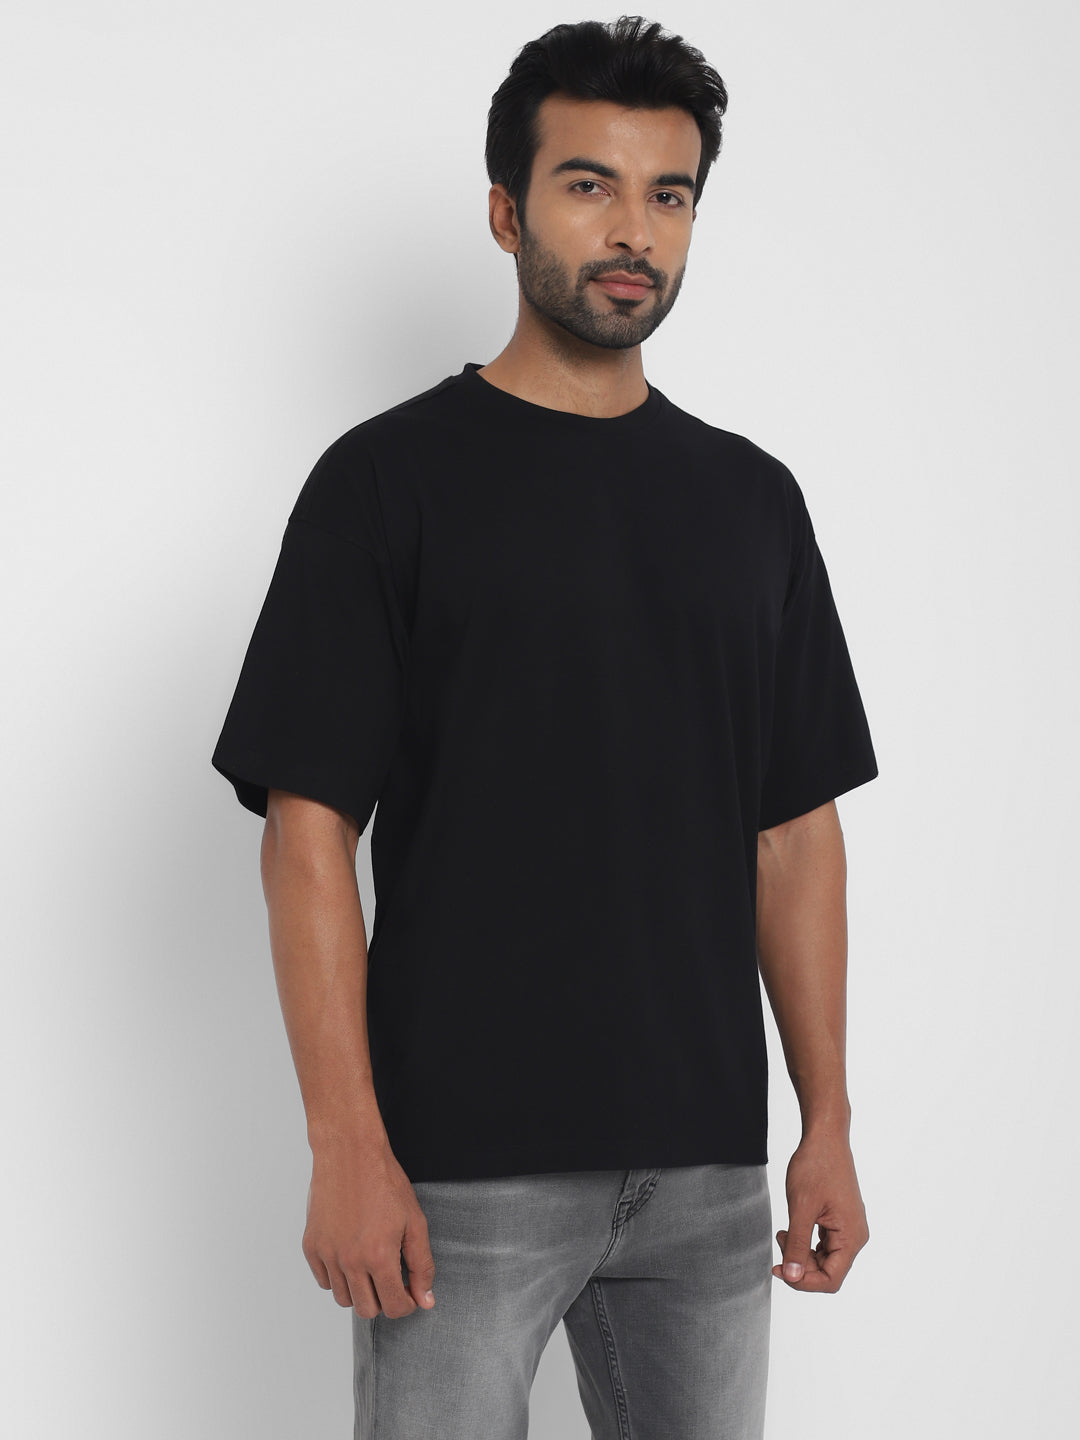 100% Cotton Oversize Round Neck T-Shirt - Black